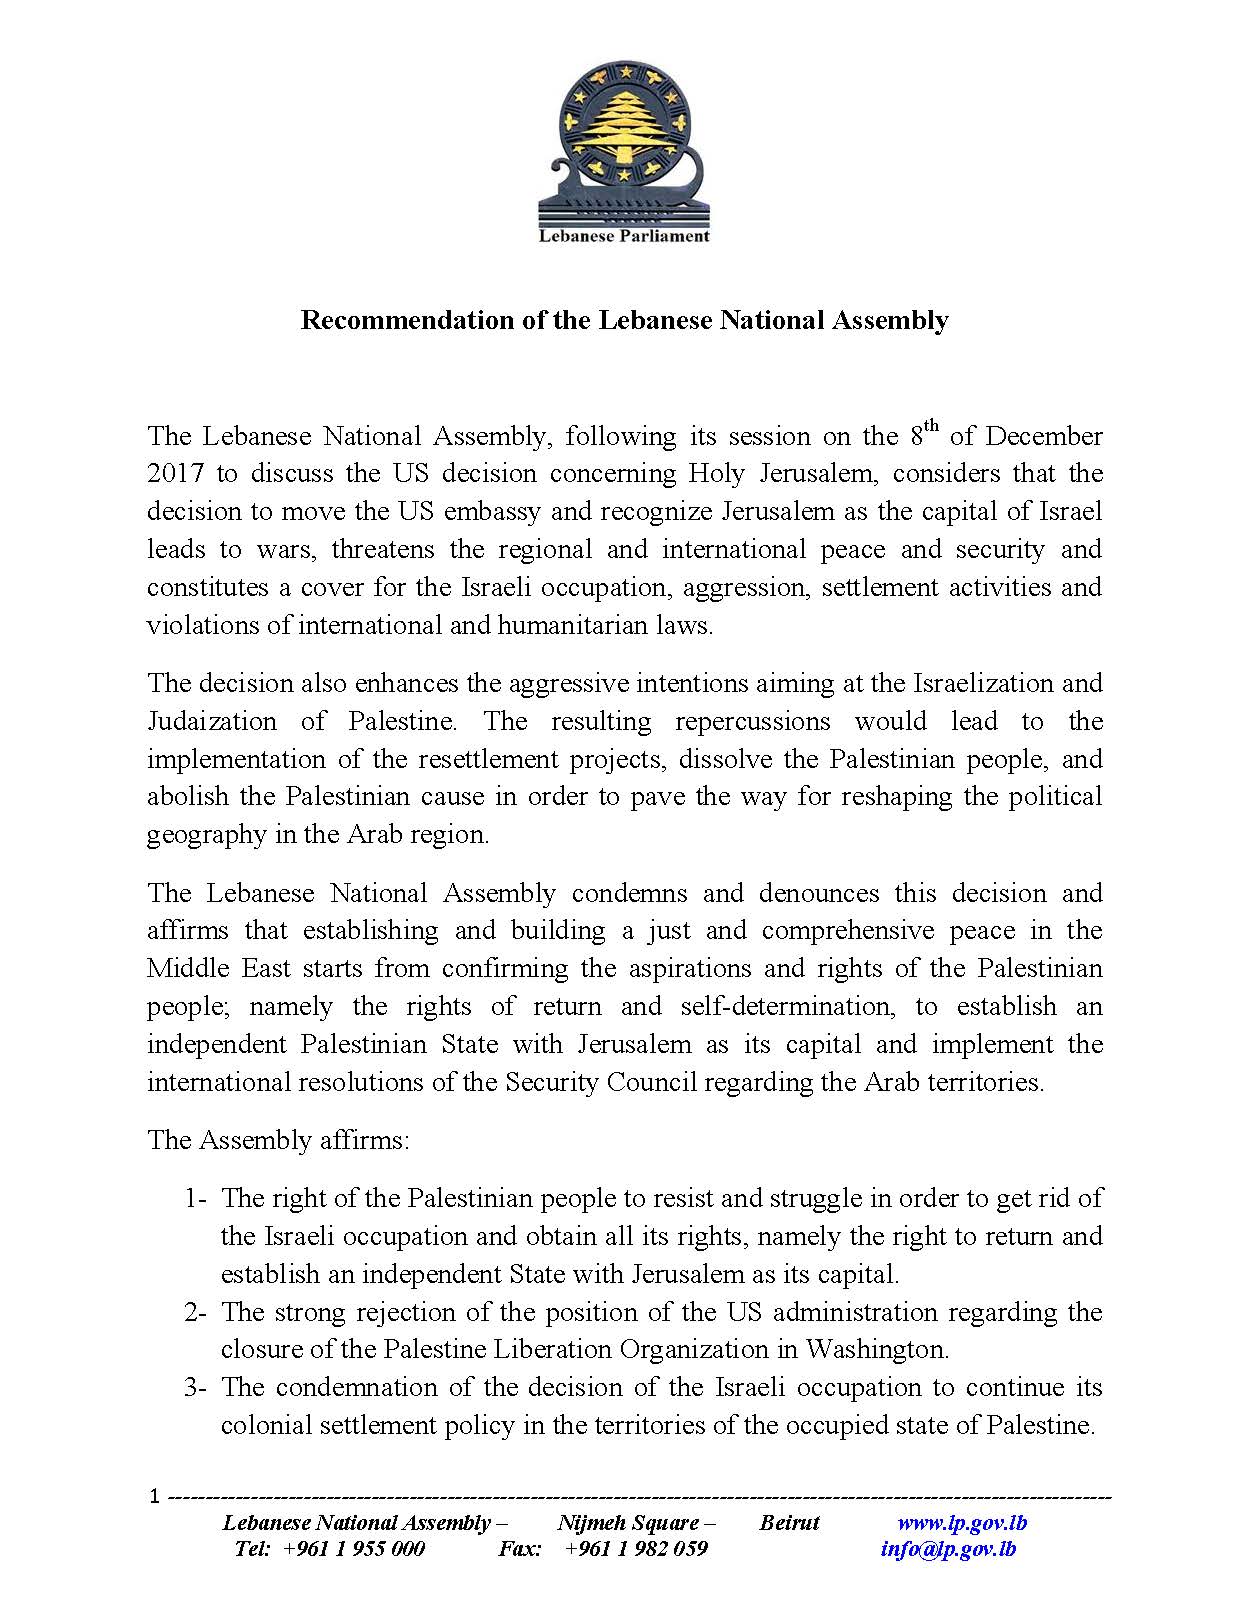 Lebanese Parliament Issues Statement Regarding US Decision on Holy Jerusalem